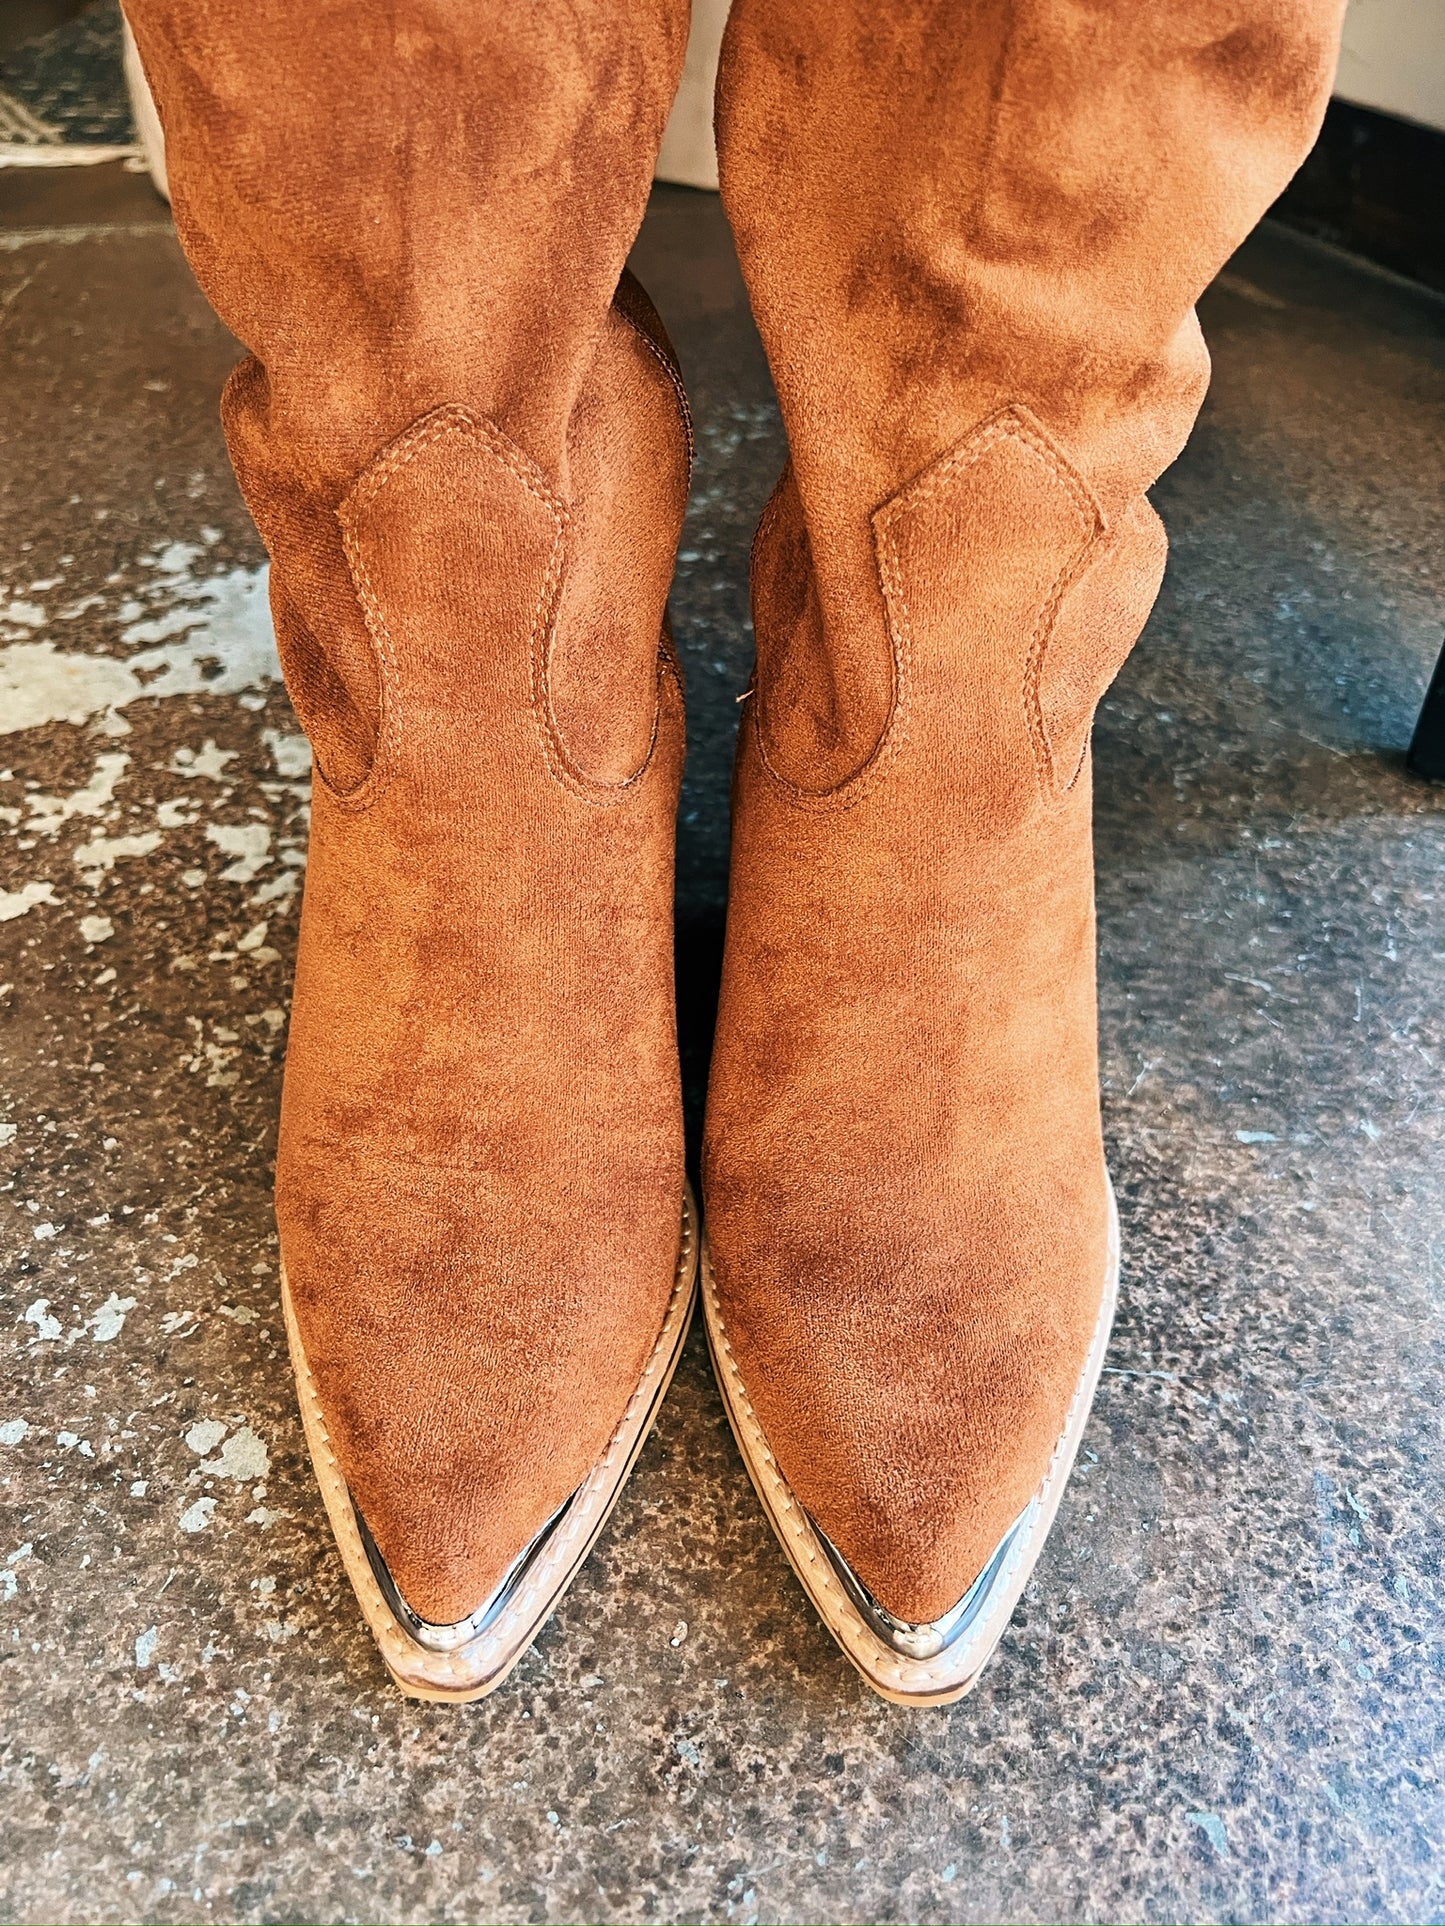 Cheyenne Boots